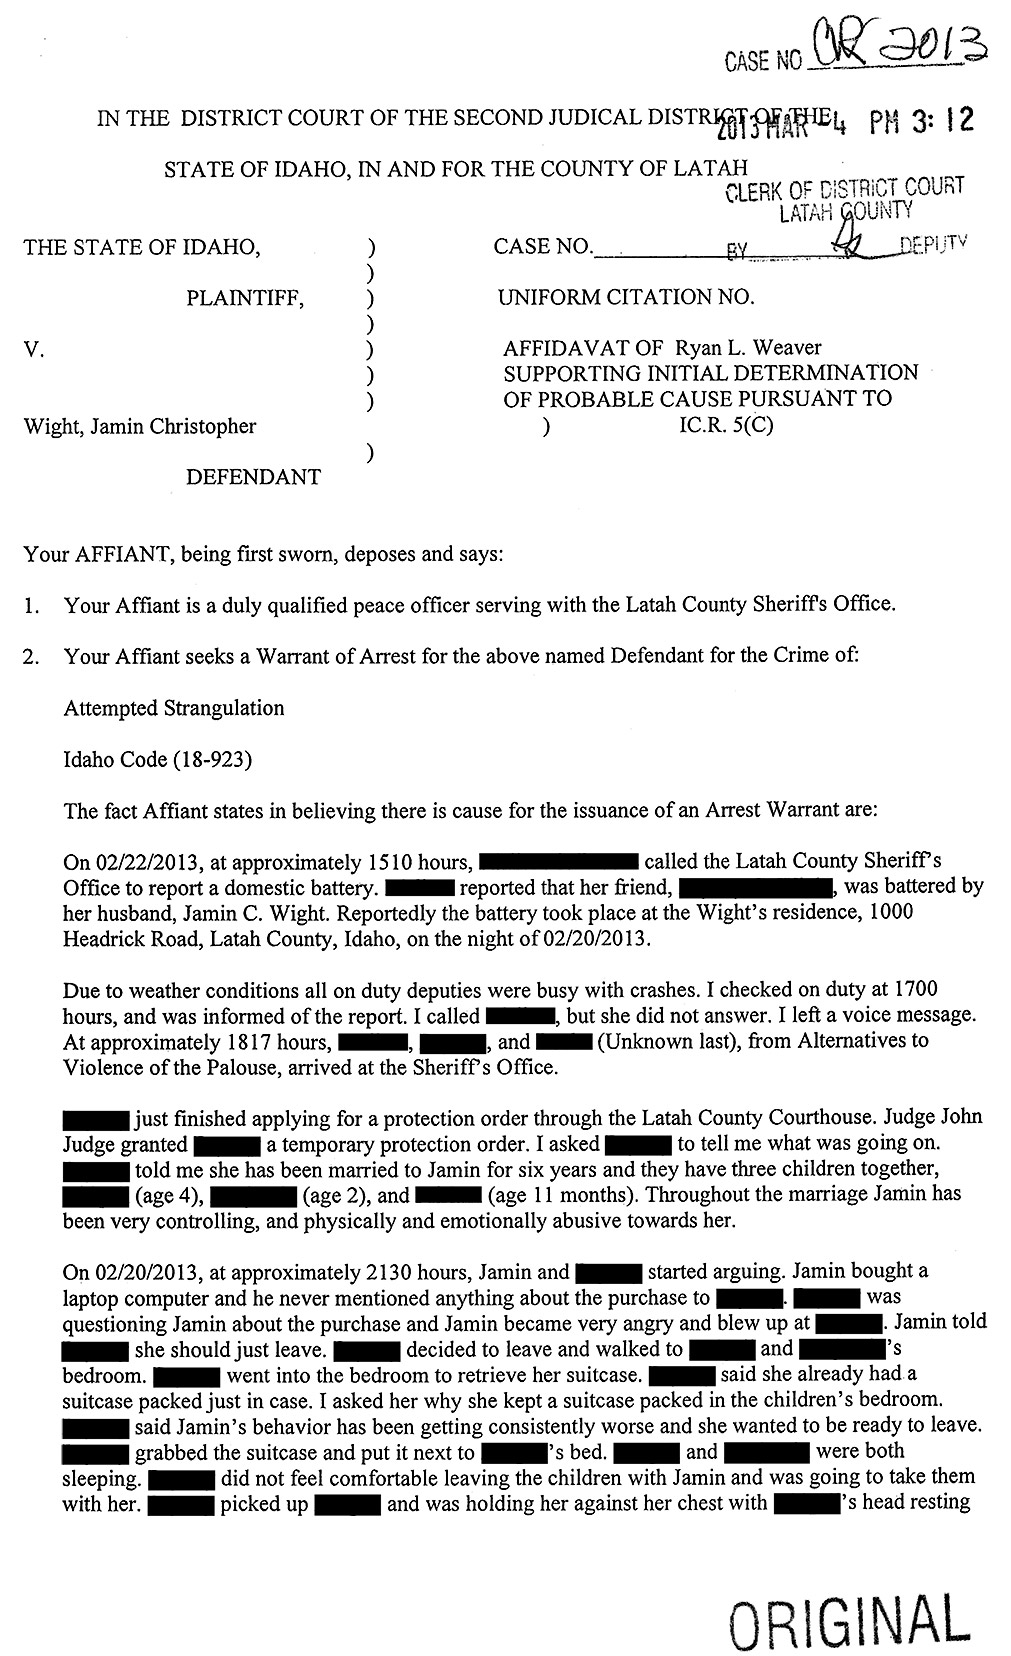 Affidavit of Latah County Sheriff’s Detective Ryan Weaver page 1